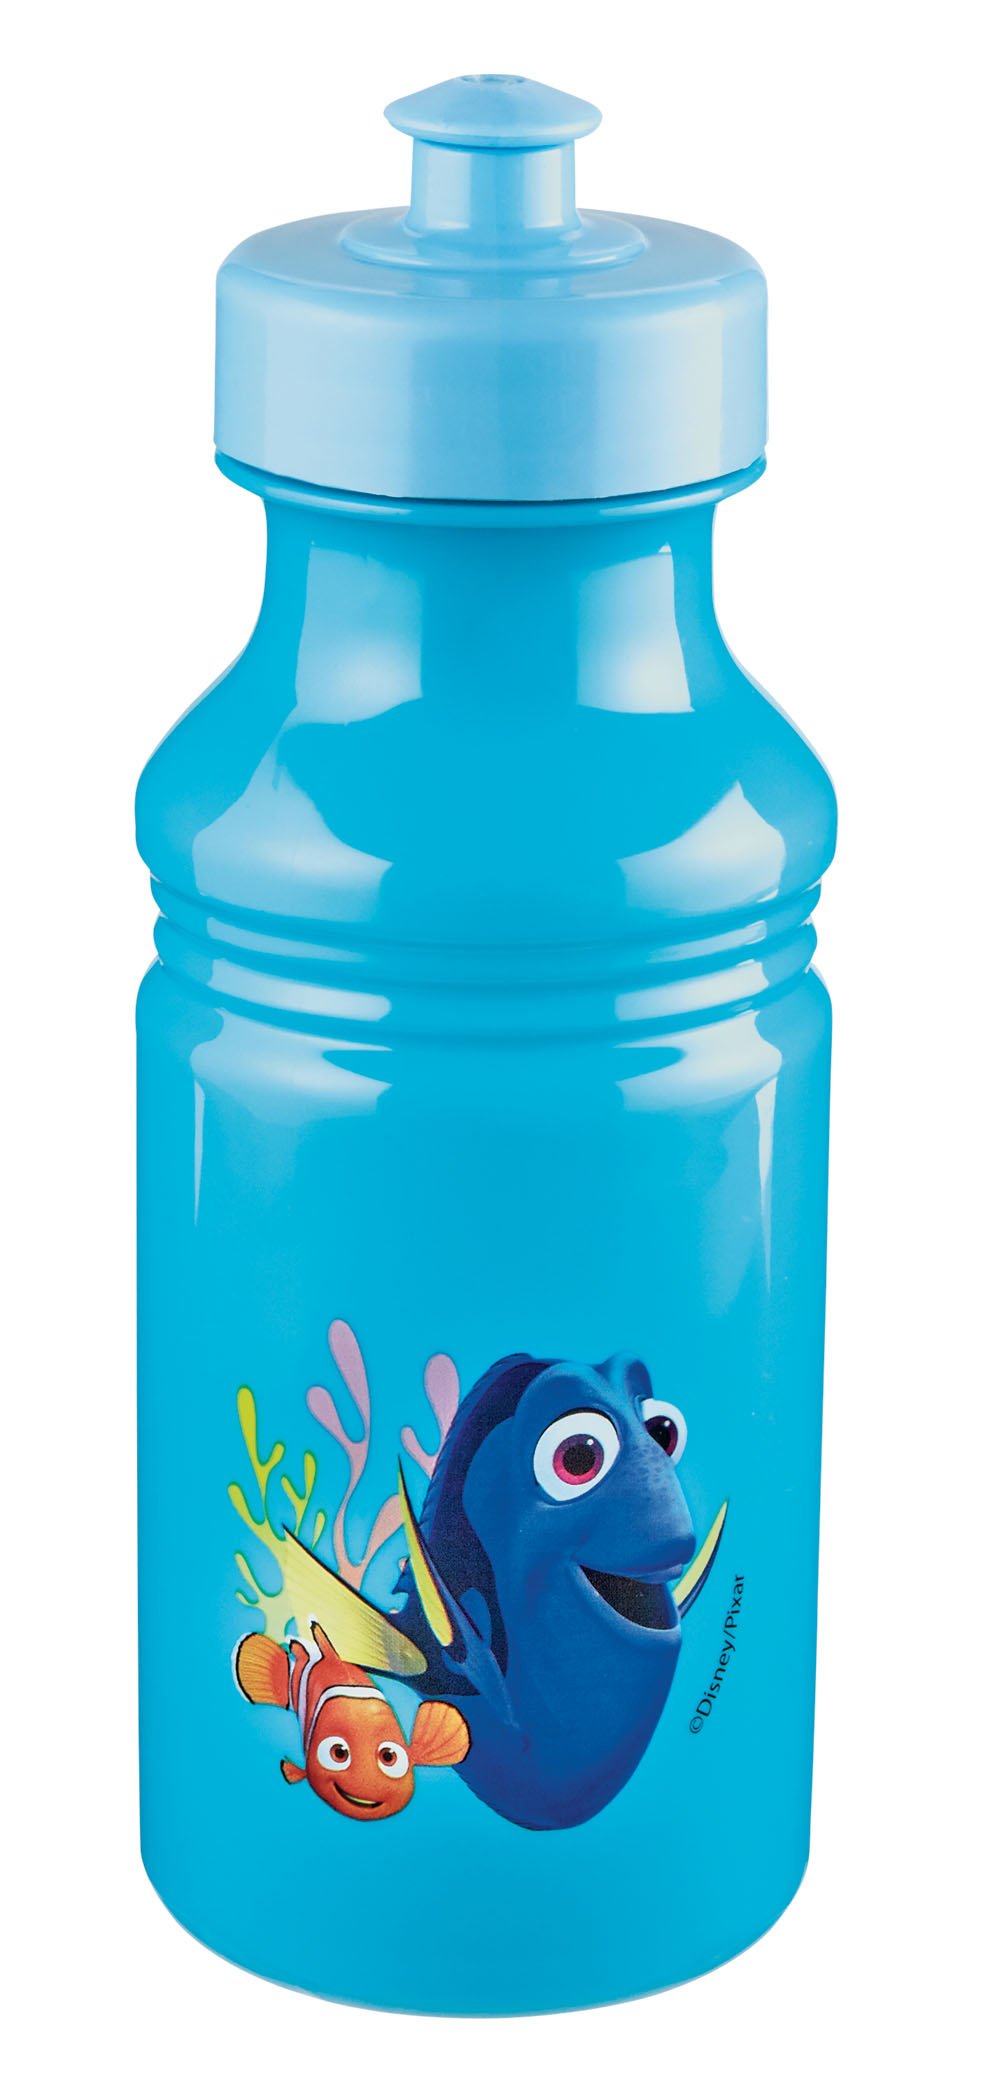 Disney Store Disney Pixar Cars Water Bottle